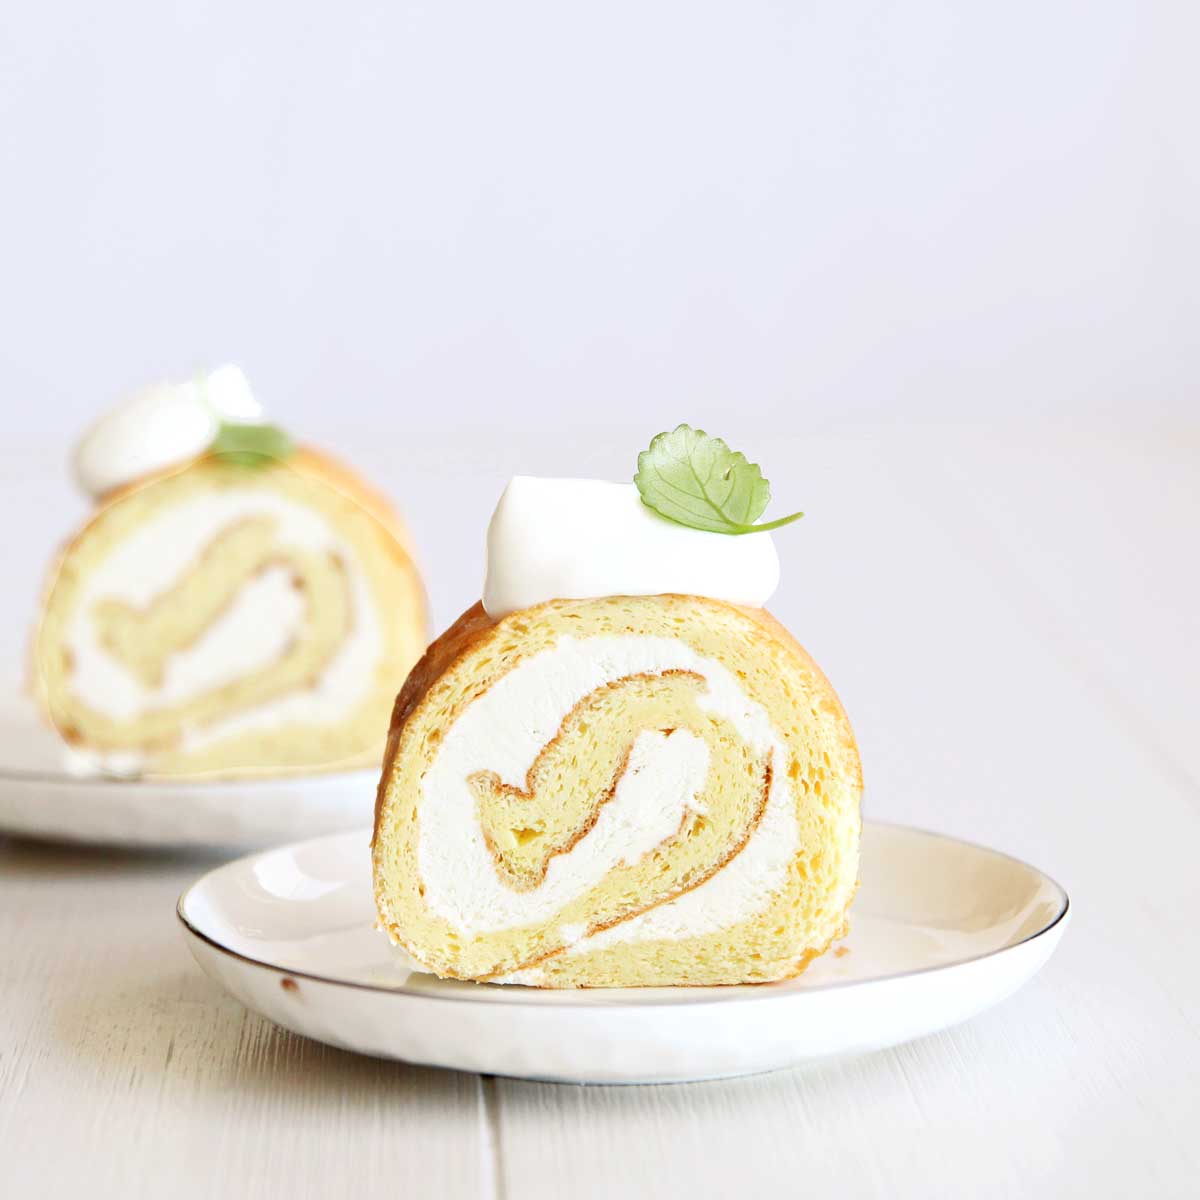 Tangy & Sweet! Greek Yogurt Swiss Roll Cake (Low Carb, Gluten-Free) - Strawberry Whipped Cream